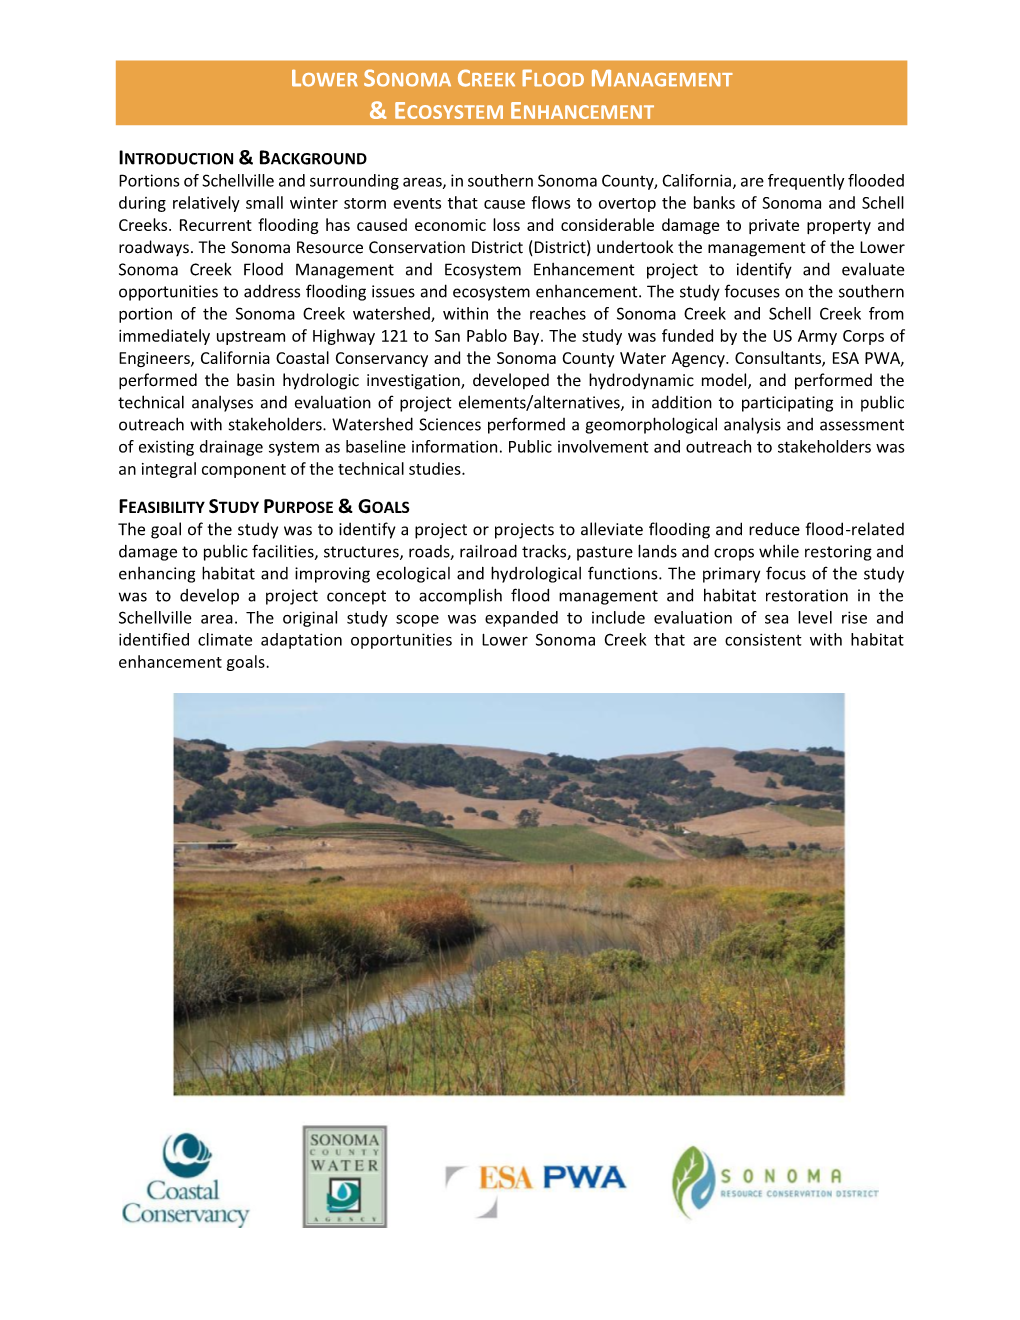 Lower Sonoma Creek Flood Management & Ecosystem Enhancement